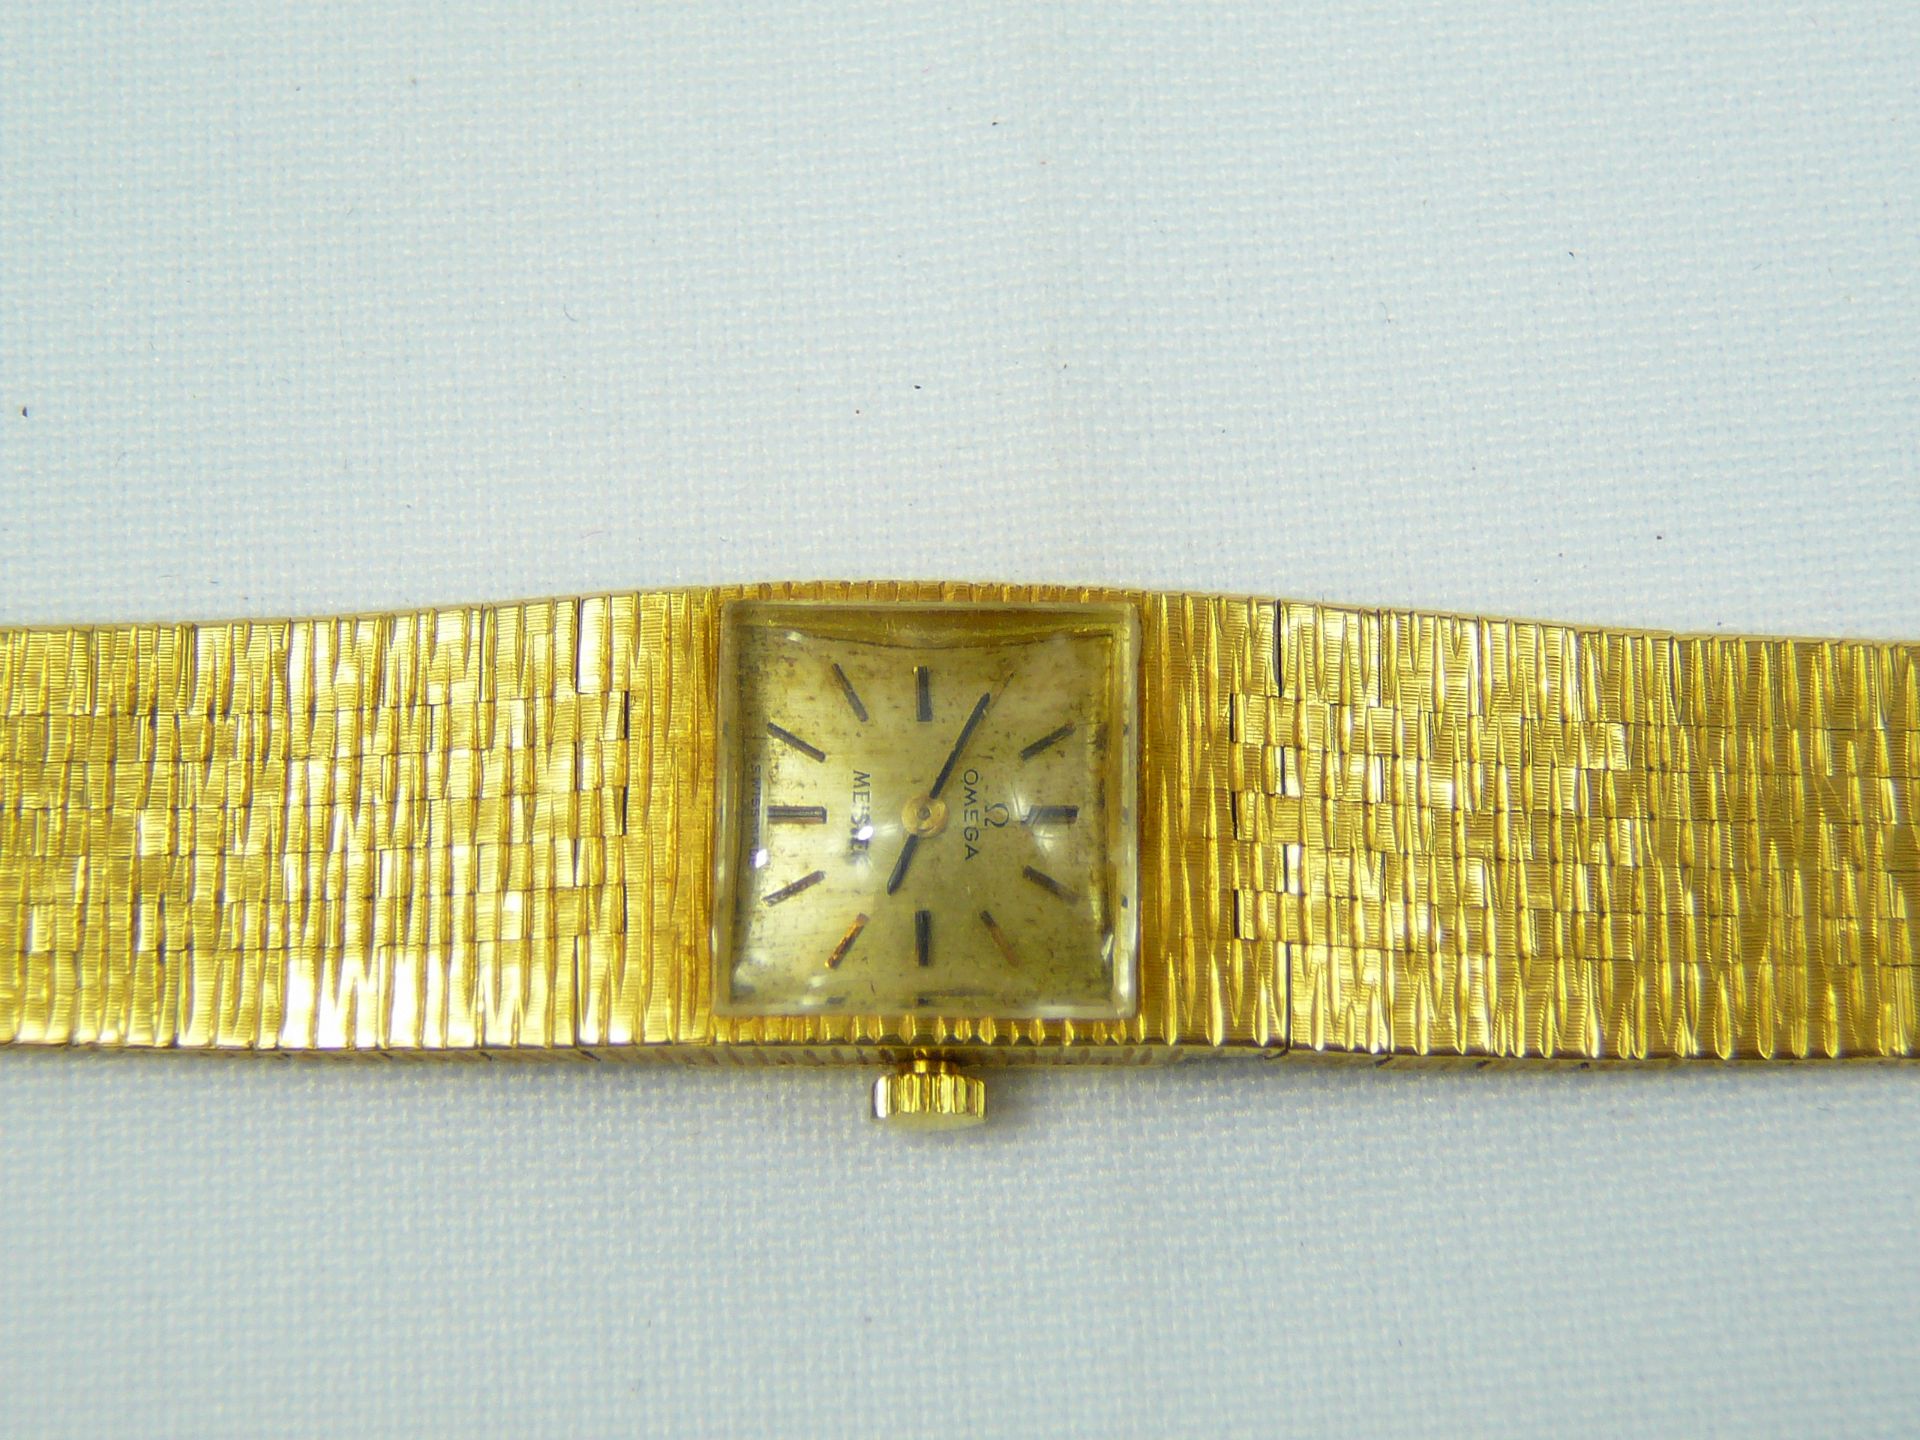 Ladies gold Omega wrist watch - Image 3 of 4